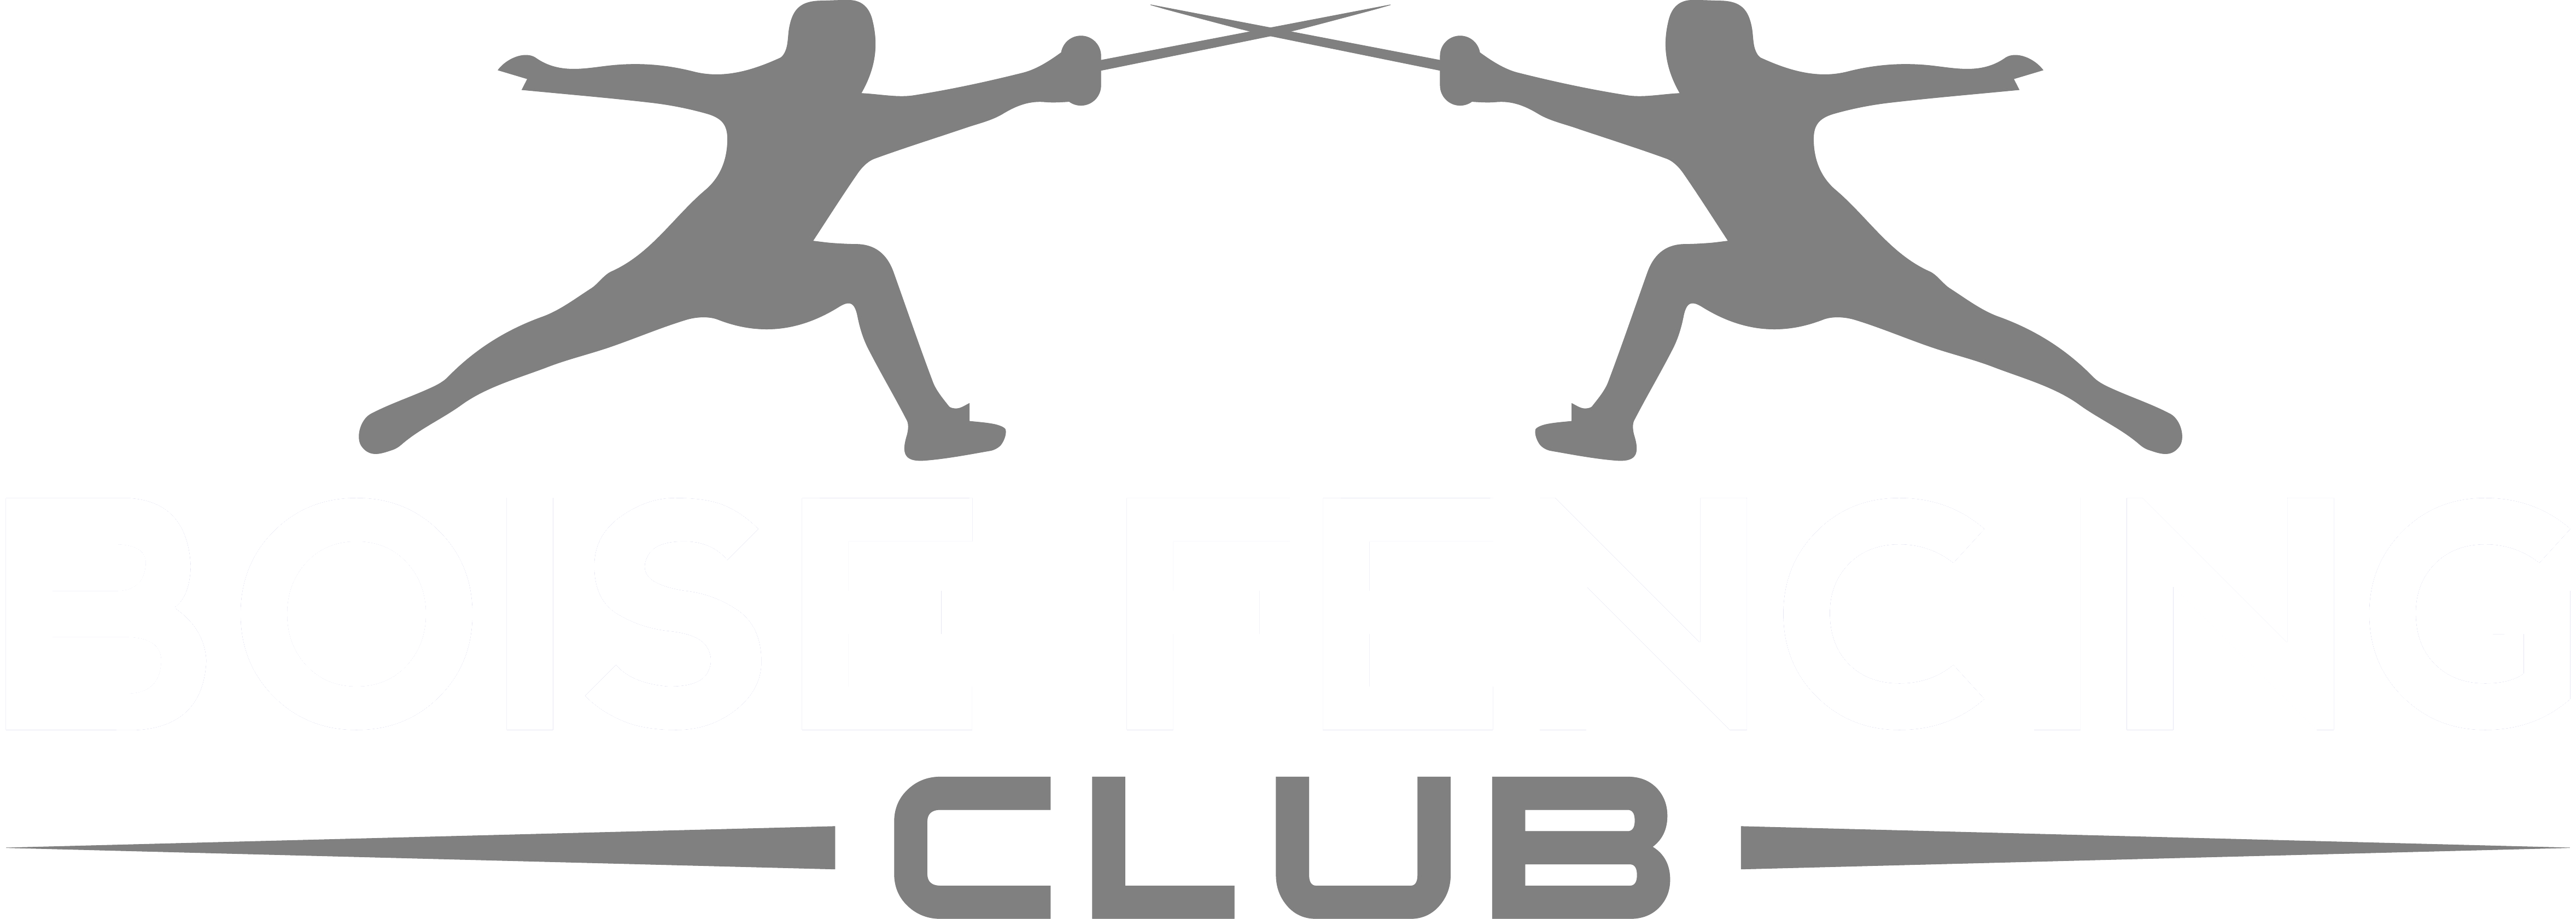 Fencing Logo - BoiseFencing – Olympic Sport of Fencing